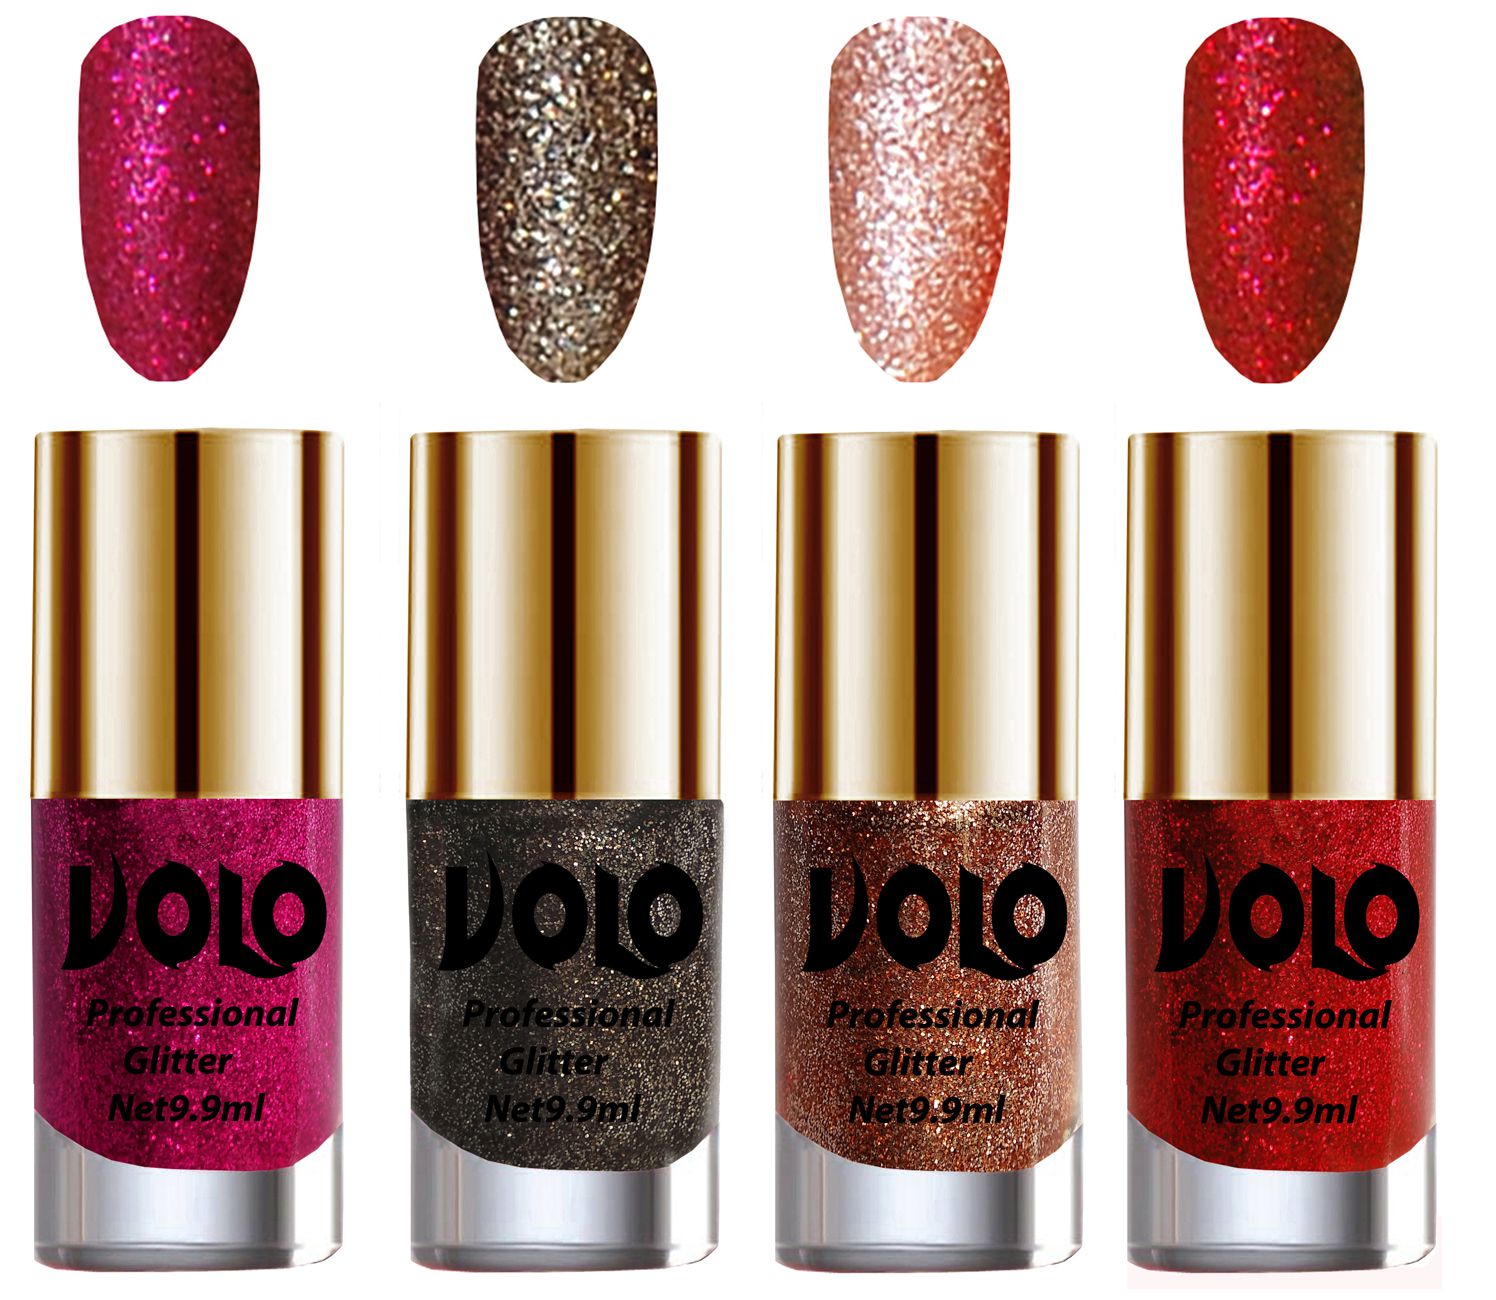     			VOLO Professionally Used Glitter Shine Nail Polish Magenta,Grey,Peach Red Pack of 4 39 mL